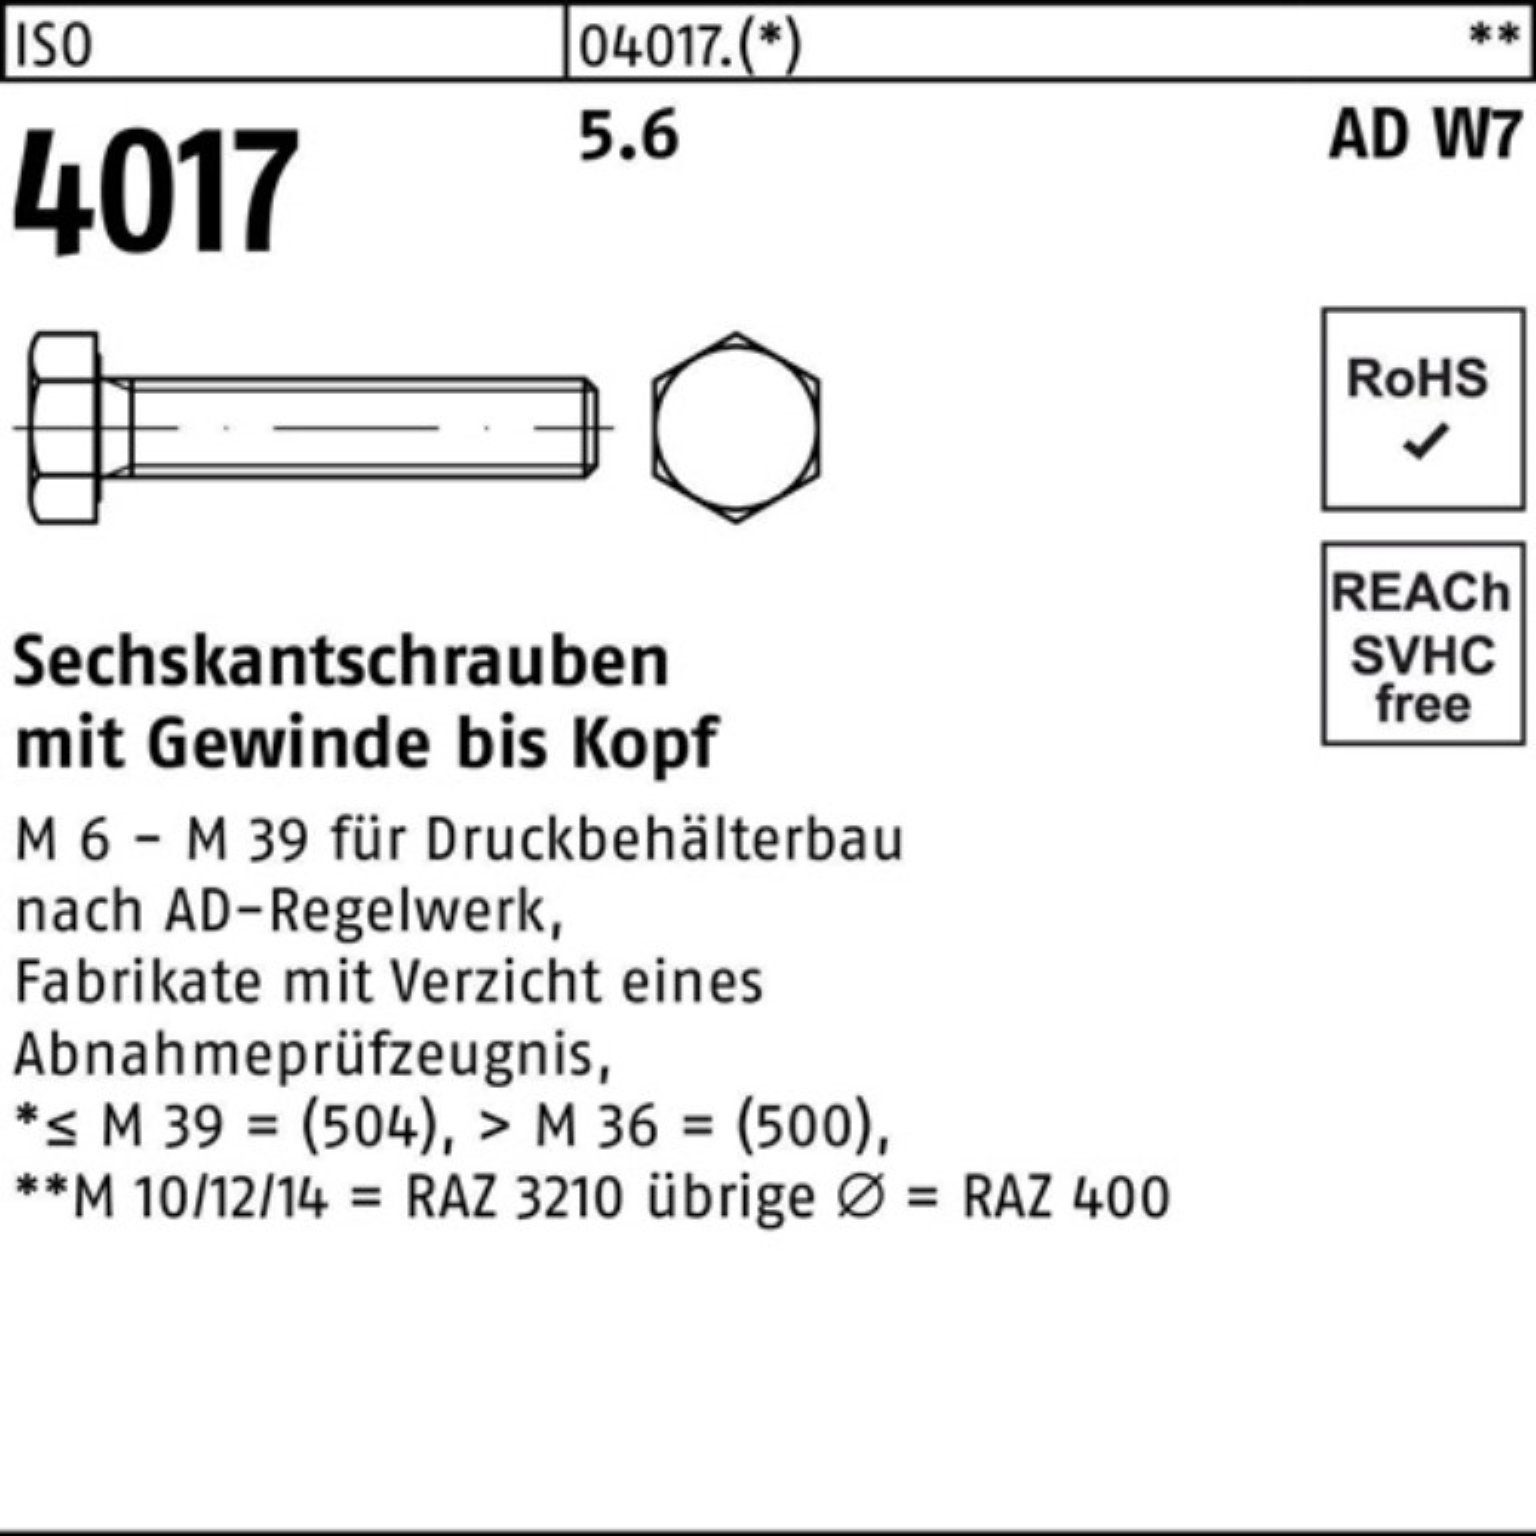 Pack VG 5.6 ISO IS M30x Sechskantschraube 50 100er Sechskantschraube Bufab 1 4017 Stück W7 AD